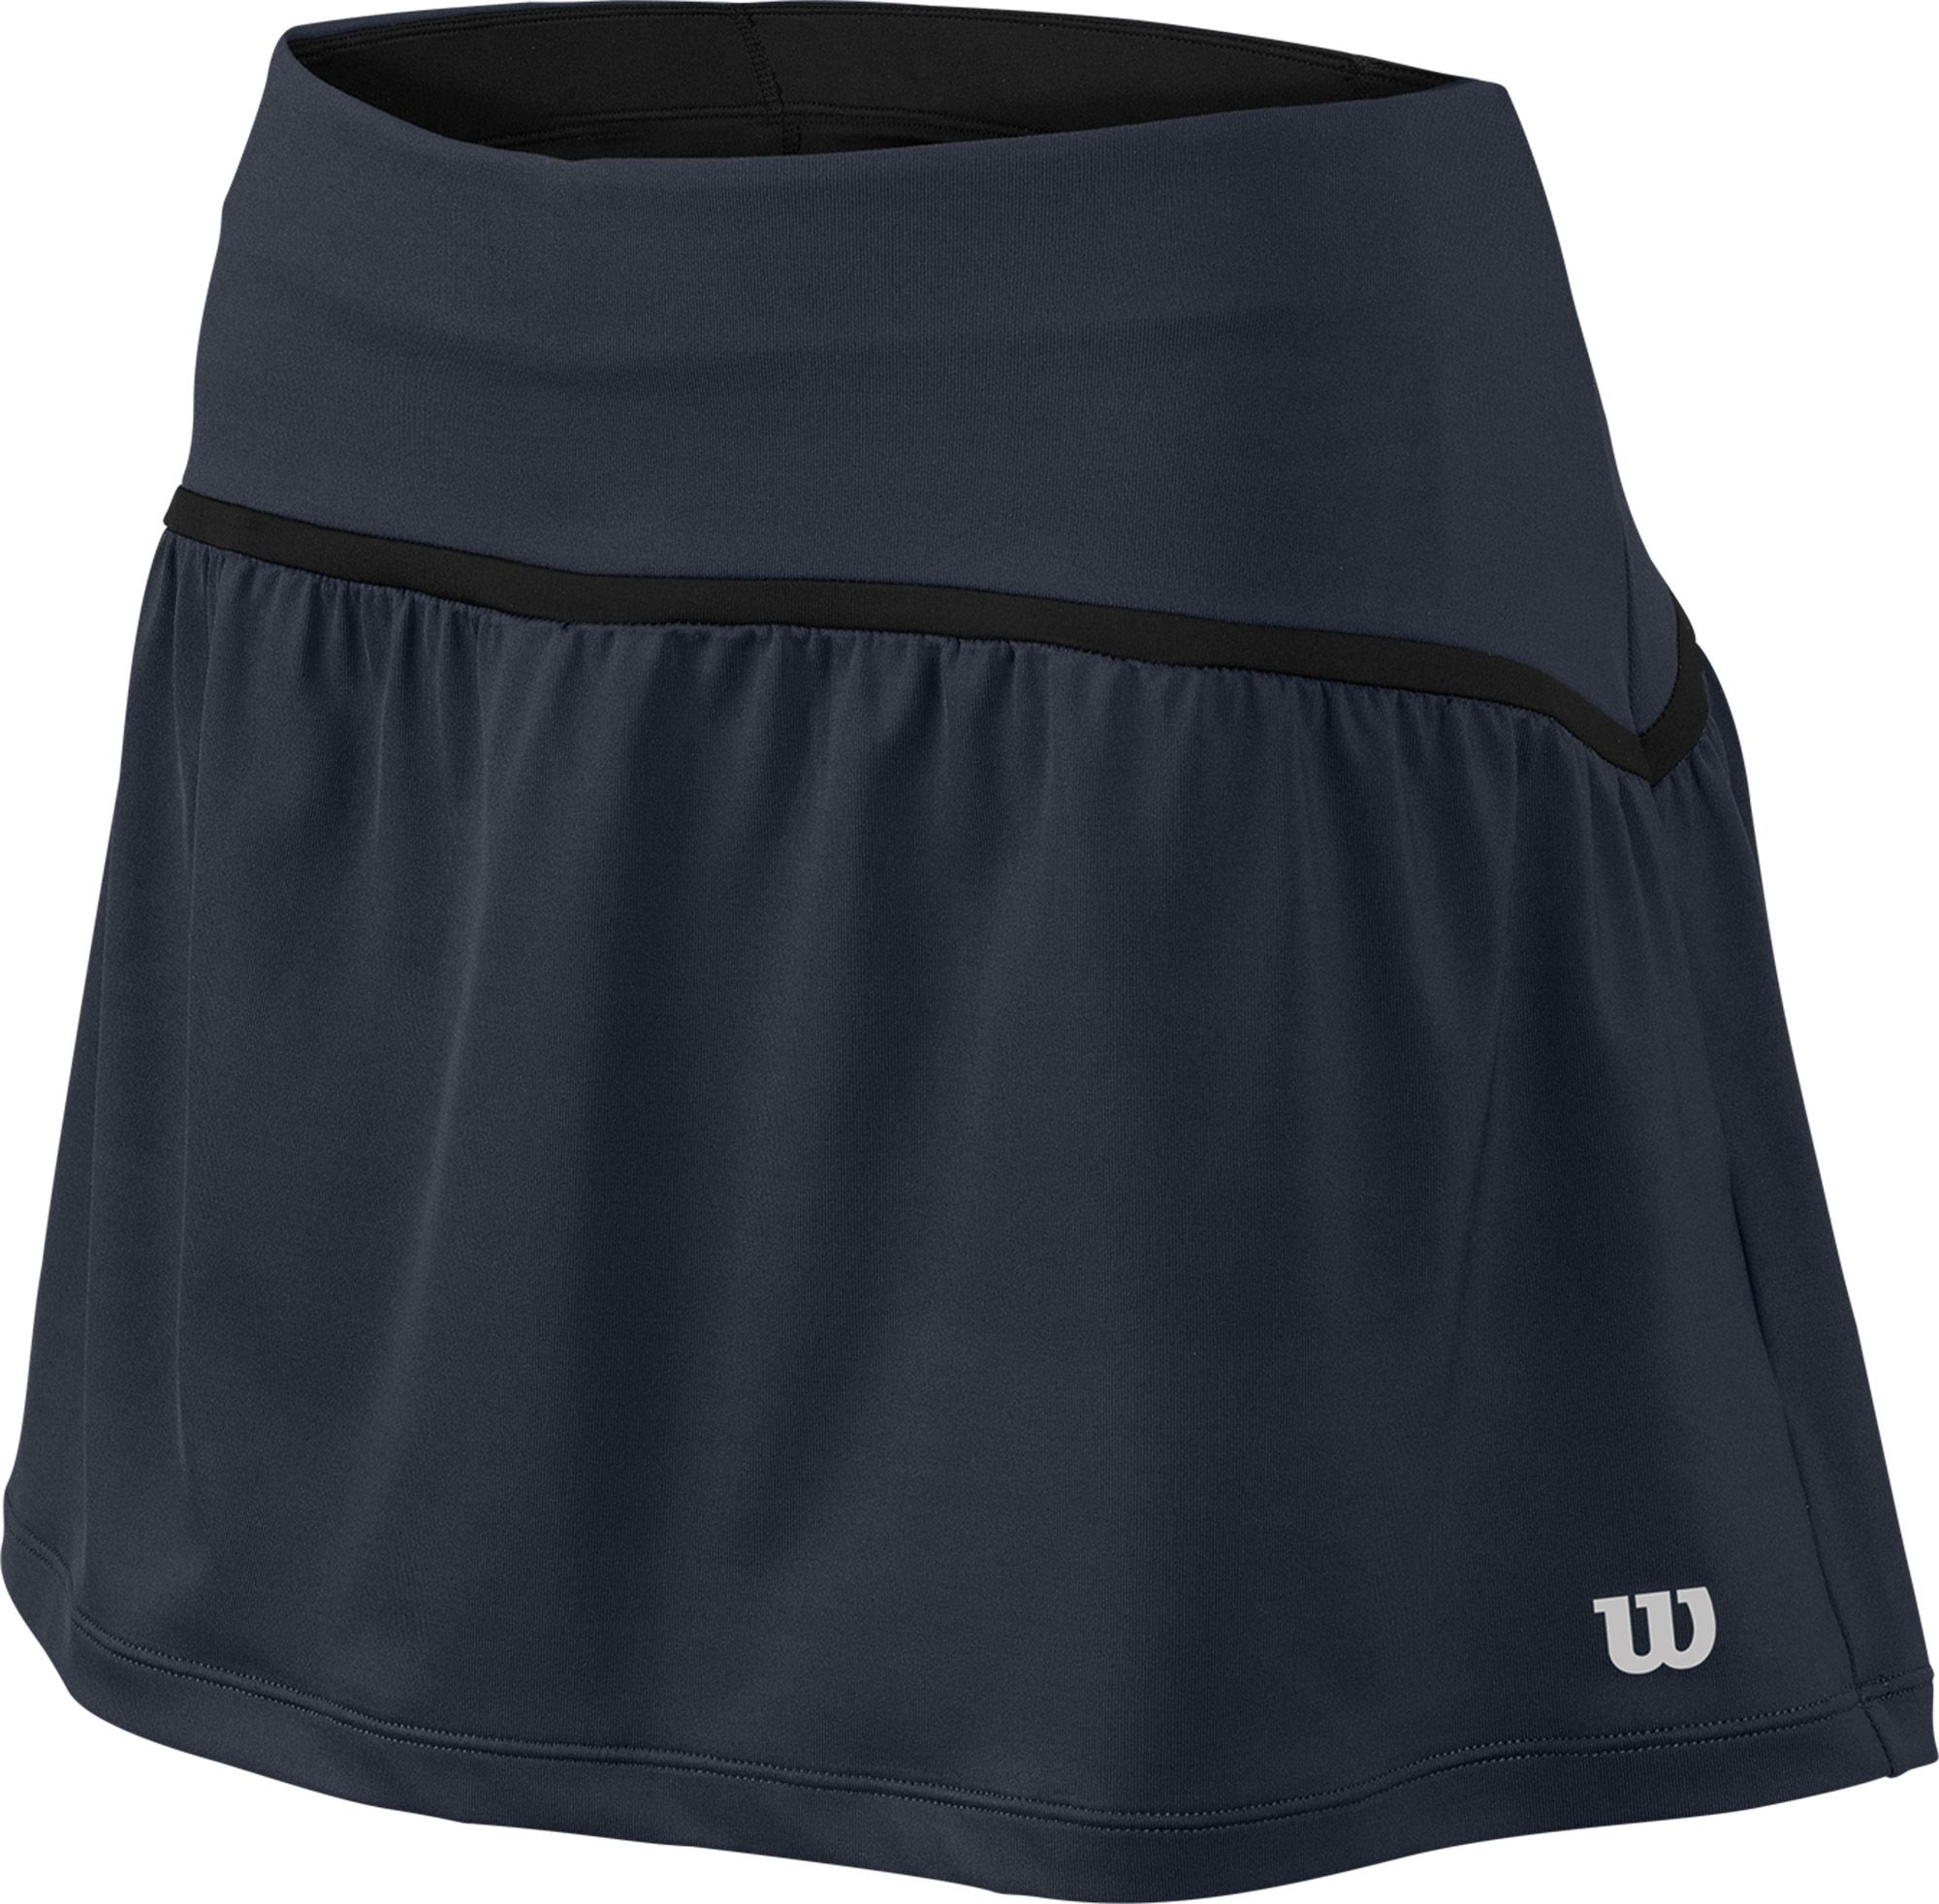 Tennis Skirts | Best Price Guarantee at DICK'S